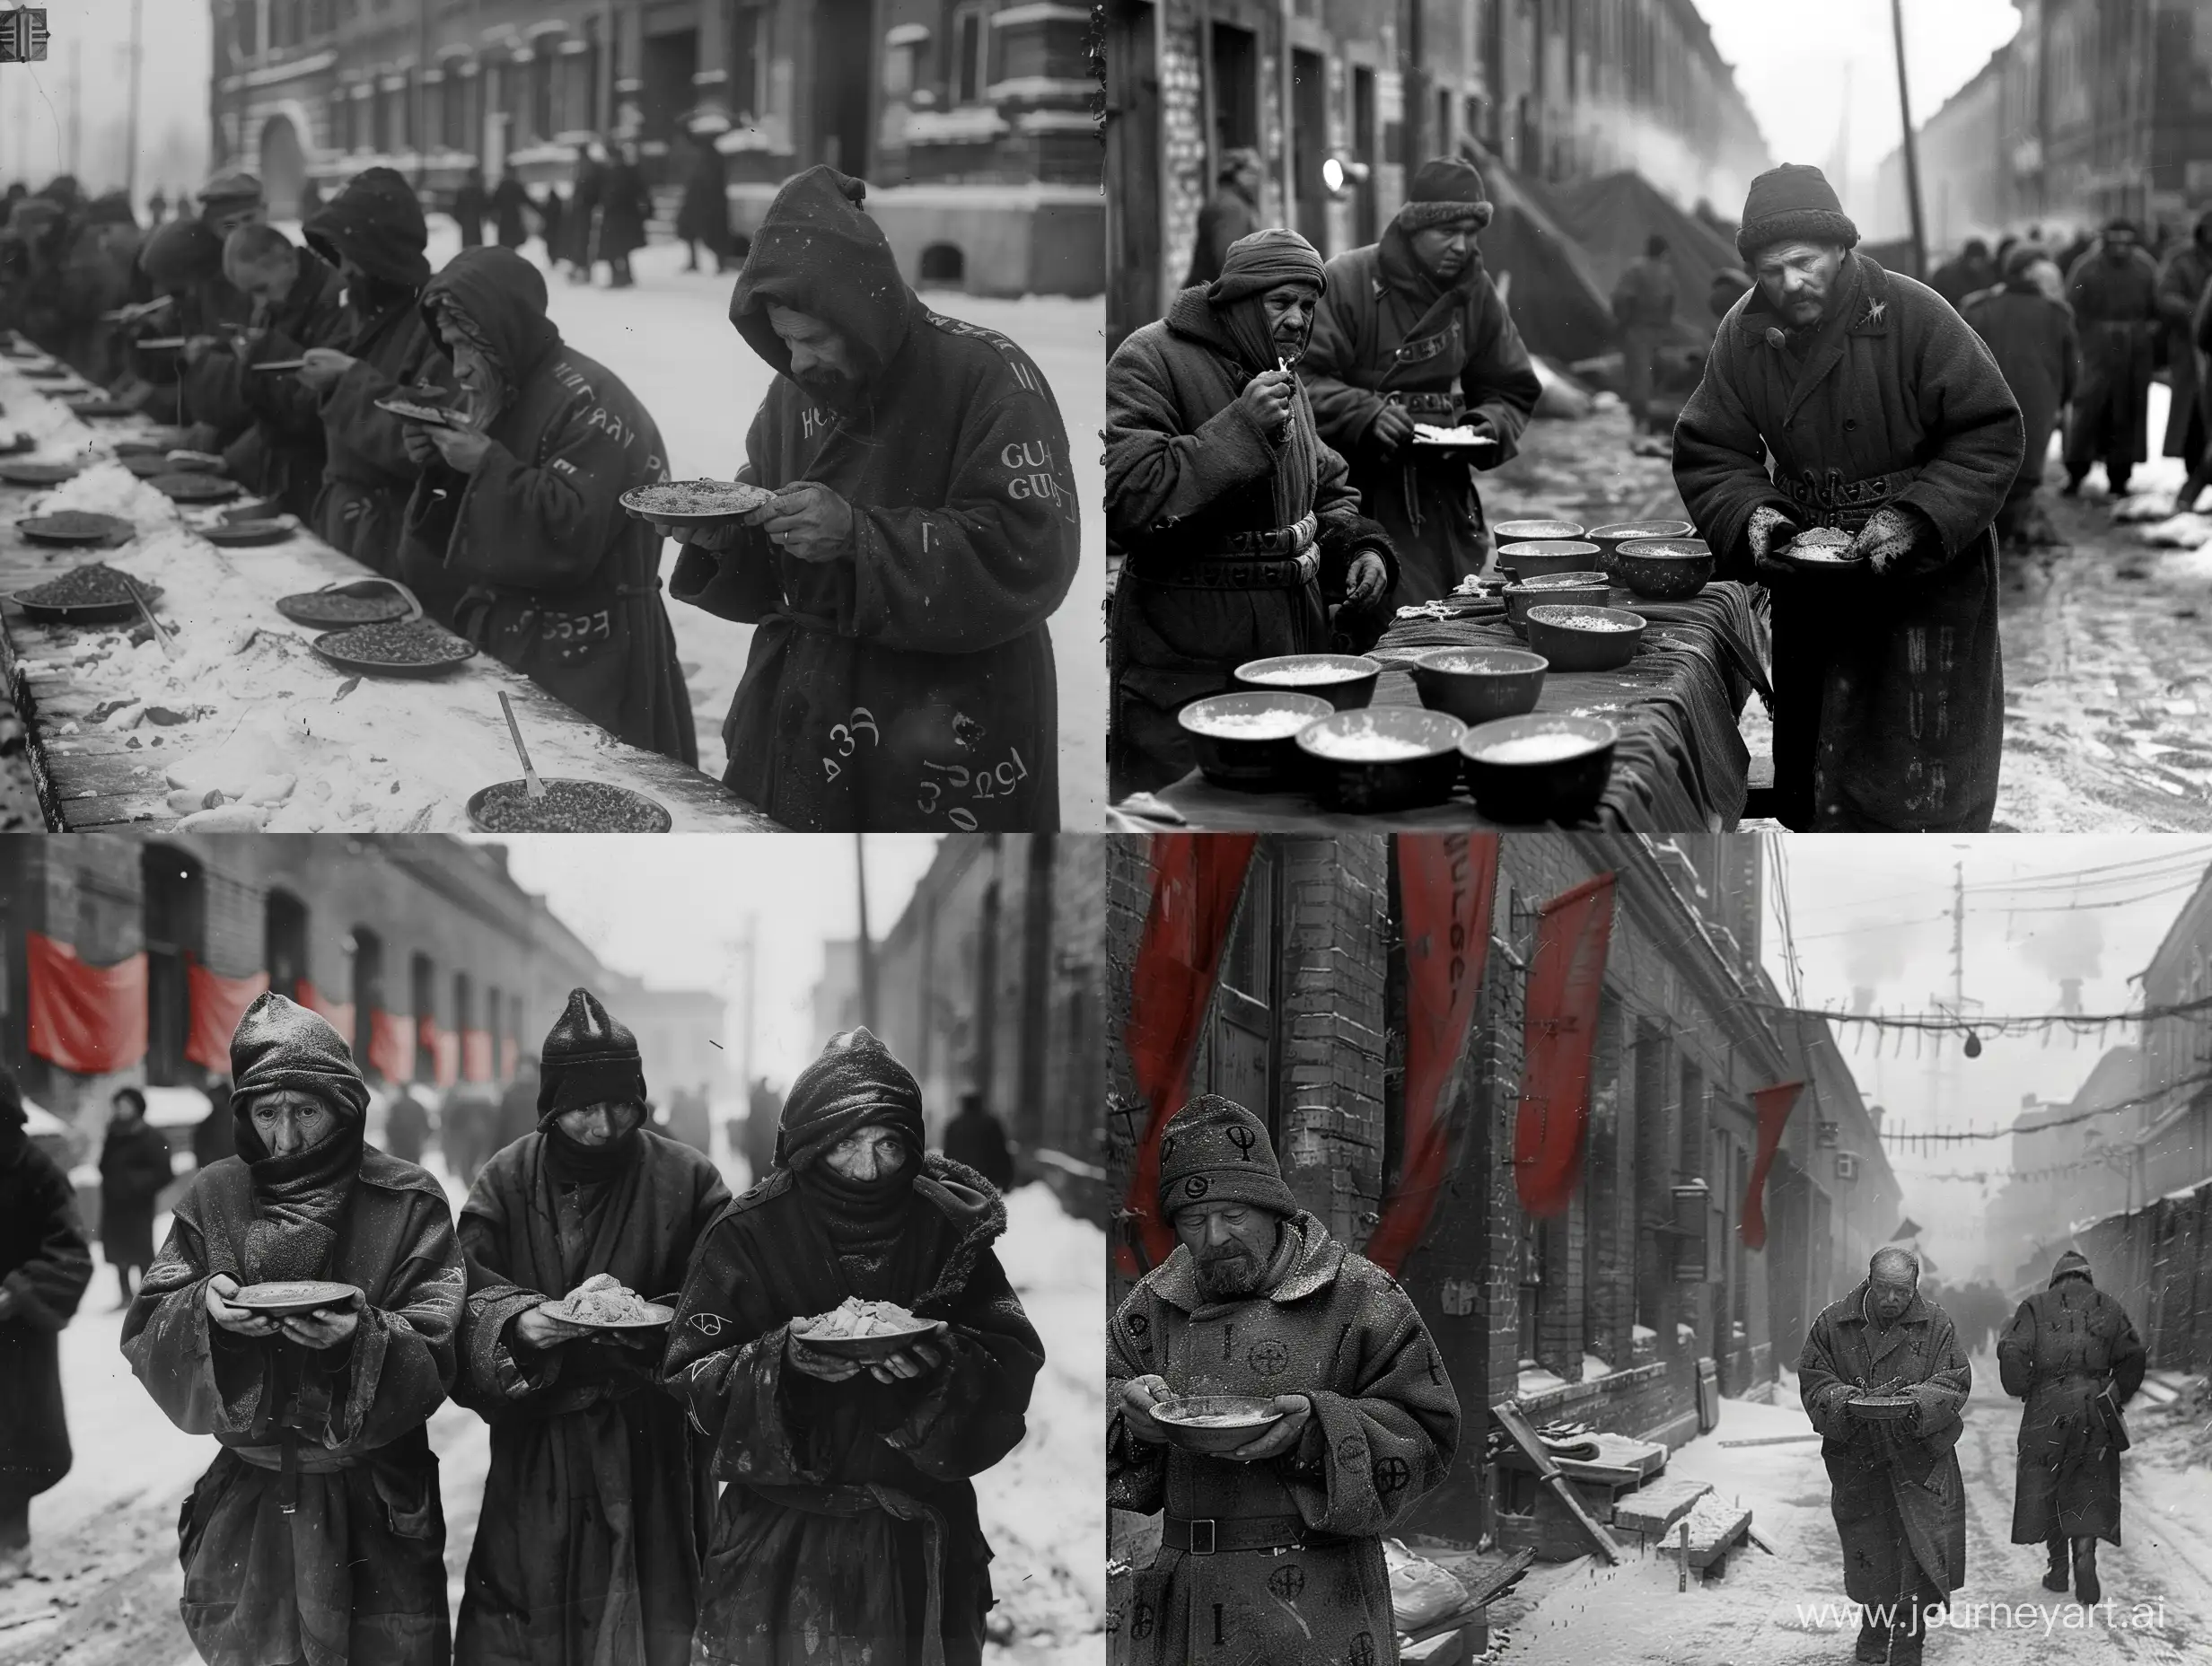 Gulag-Hardtack-Meal-in-Cold-1930s-Soviet-Spring